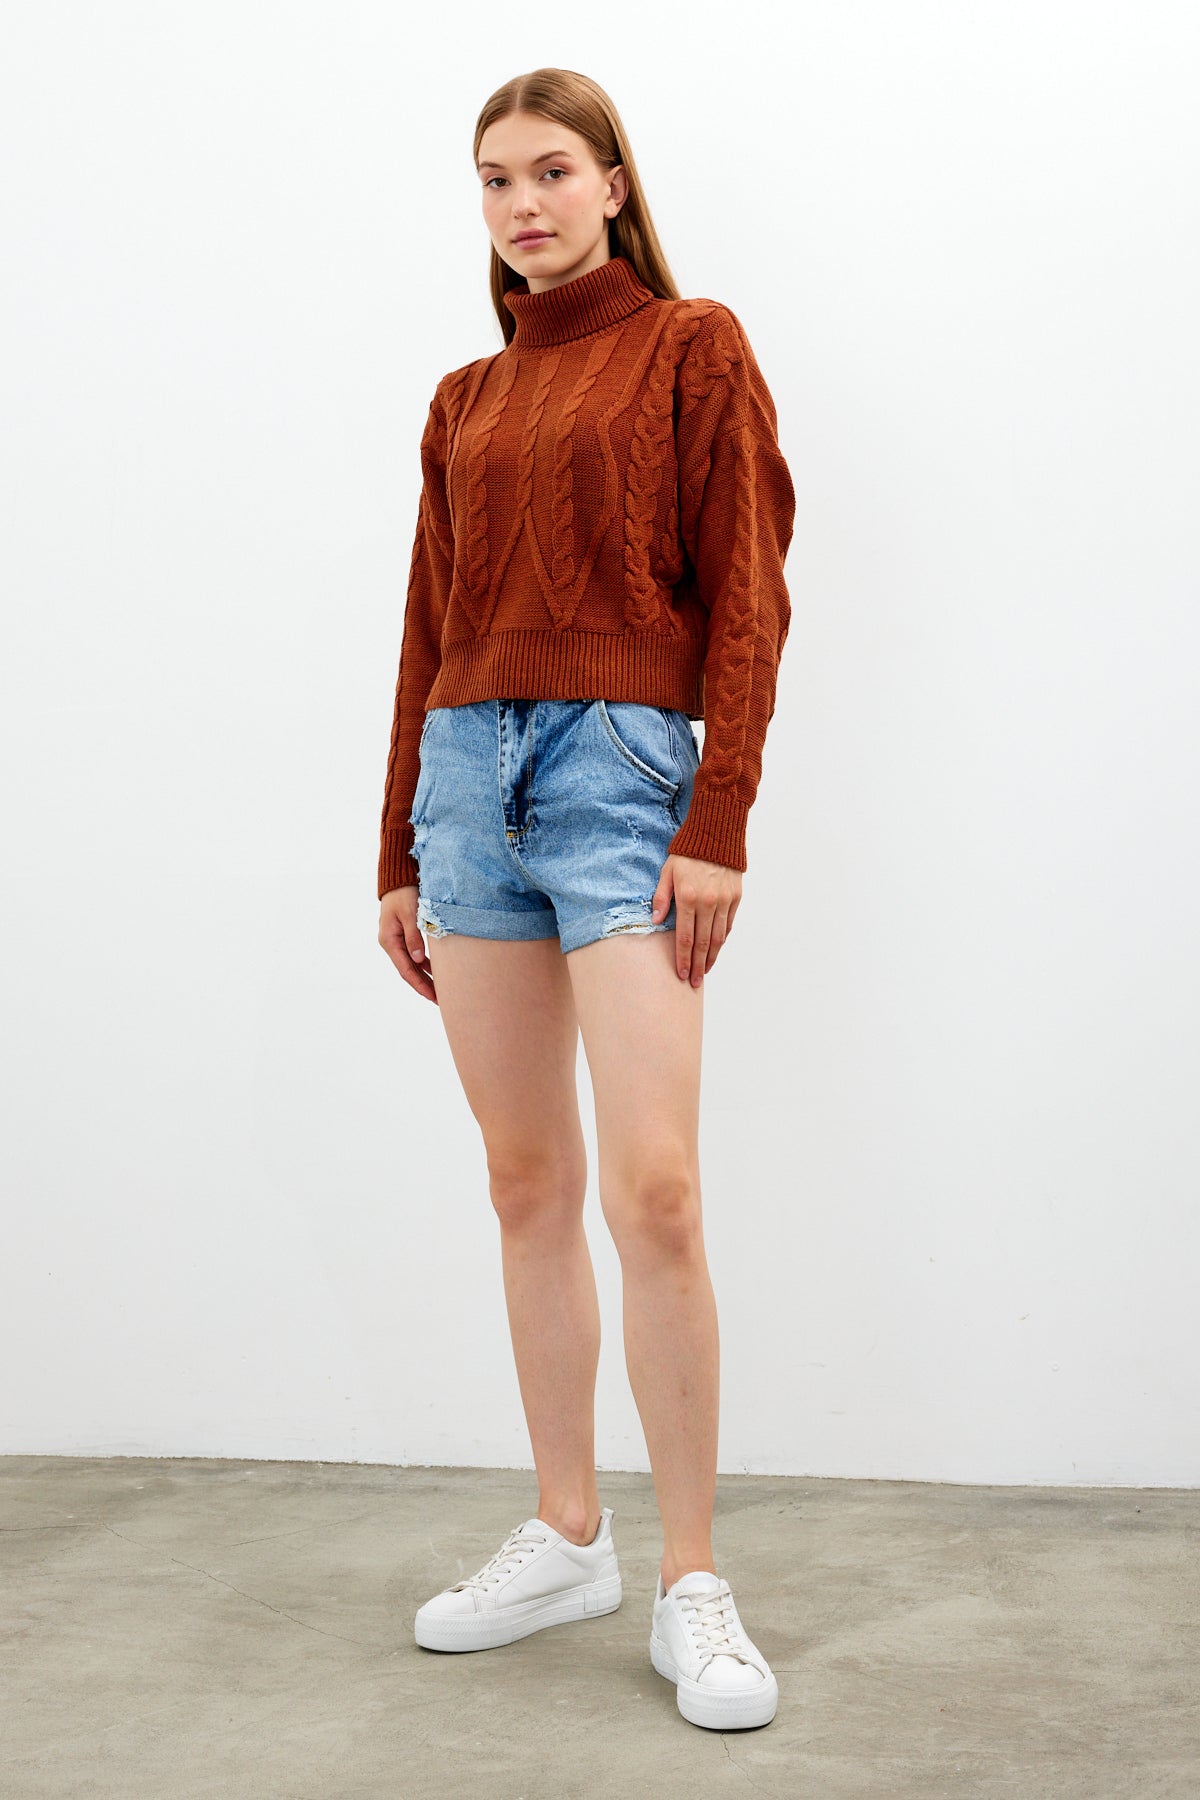 Oversized Turtleneck Sweater Solid Color With Knit Details - SKU: 1232